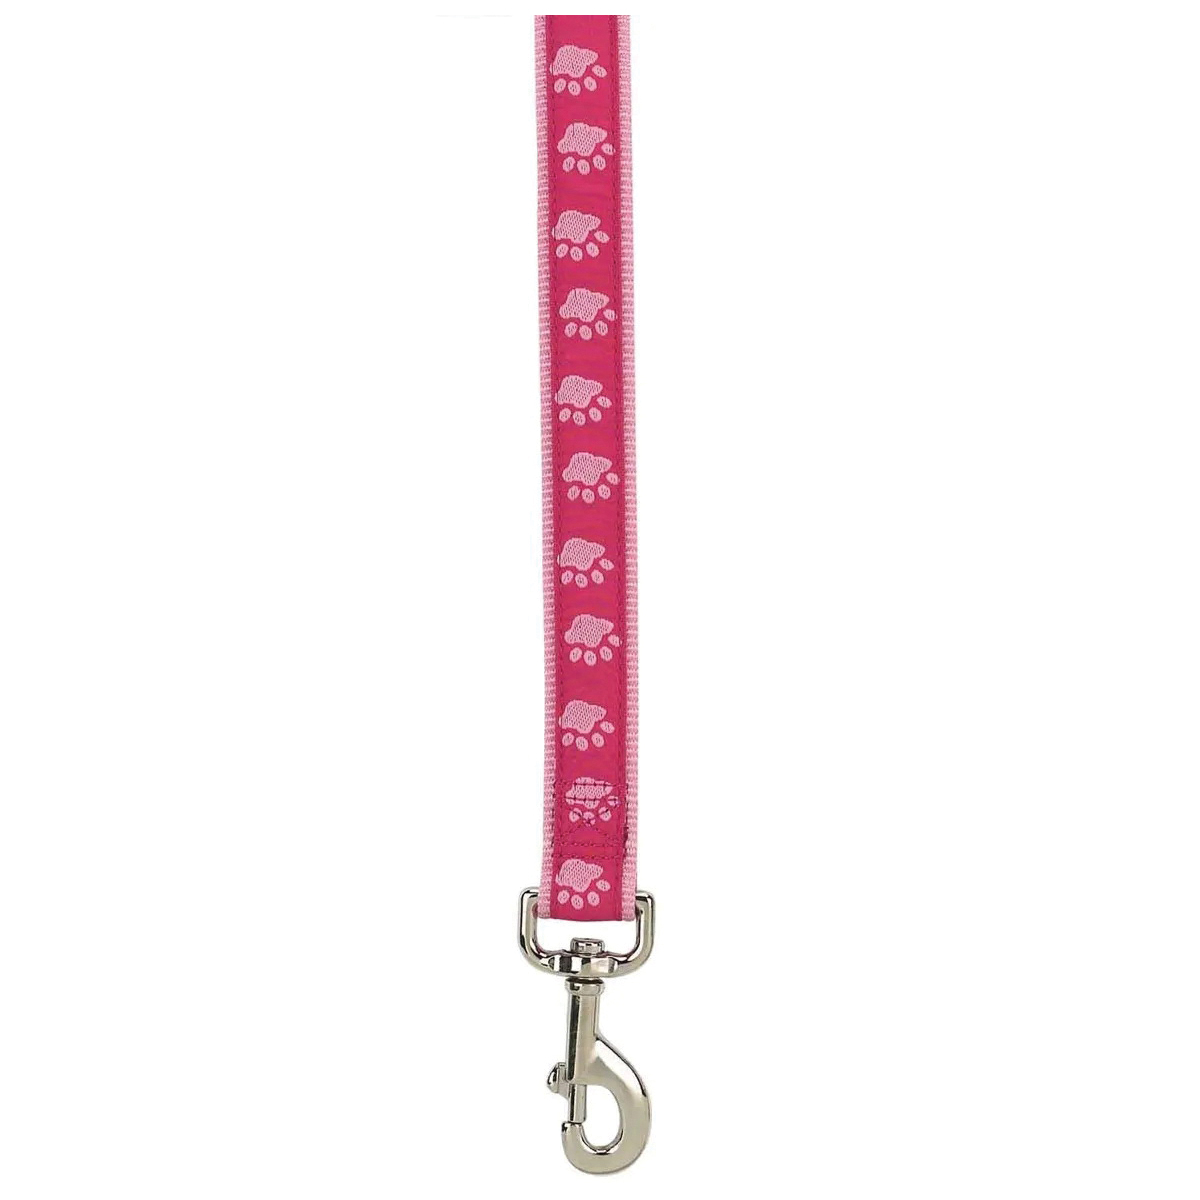 ZA8861 44 75 Two-Tone Pawprint Dog Lead, 4 ft L, 5/8 in W, Nylon Line, Pink, Fastening Method: Swivel Clip